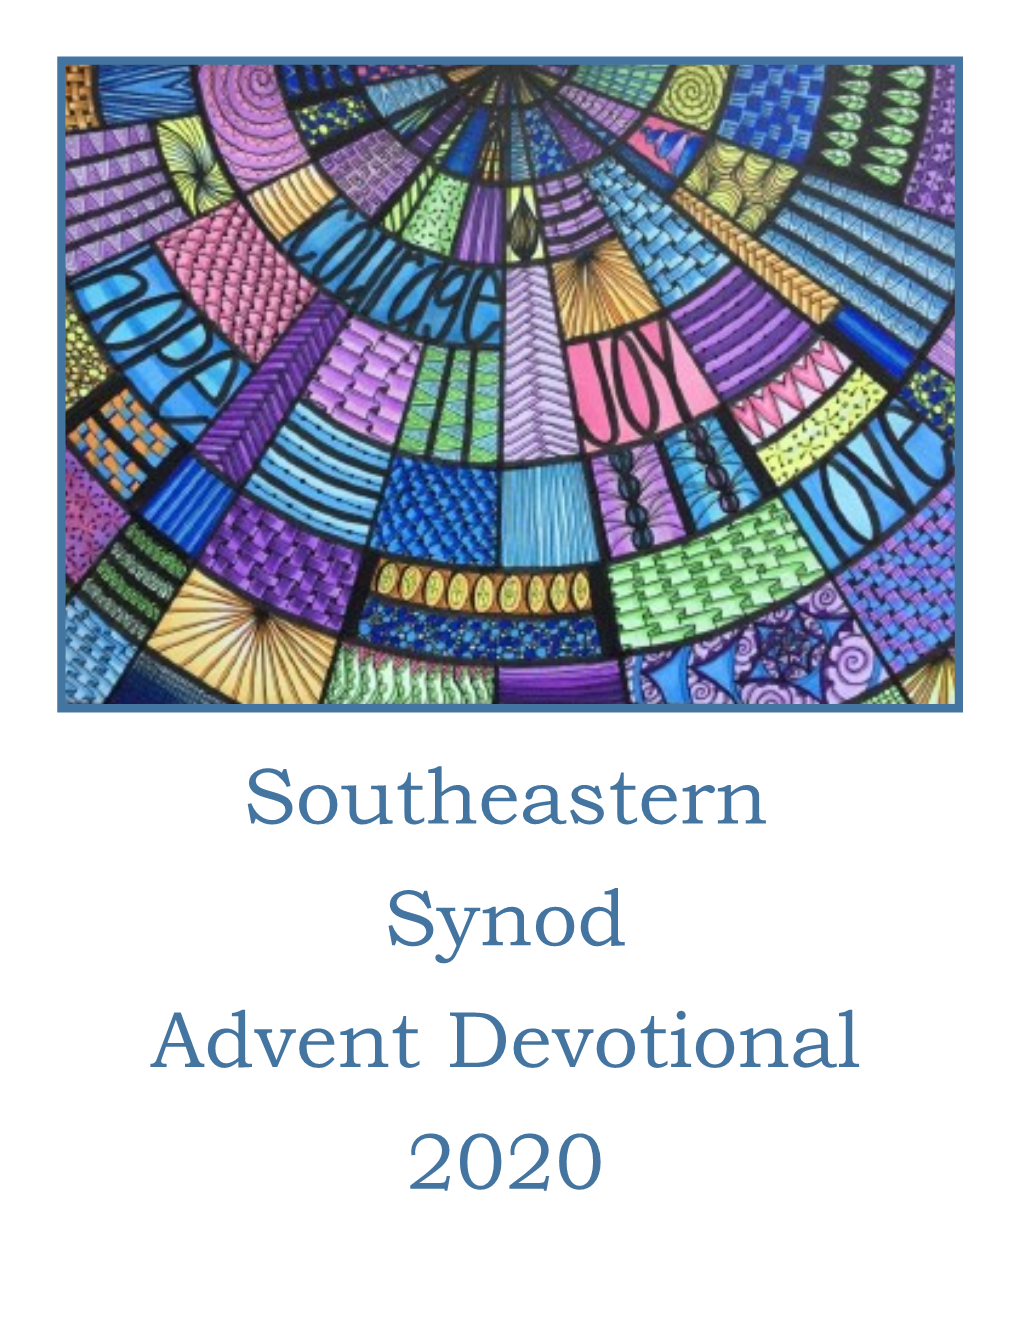 Southeastern Synod Advent Devotional 2020